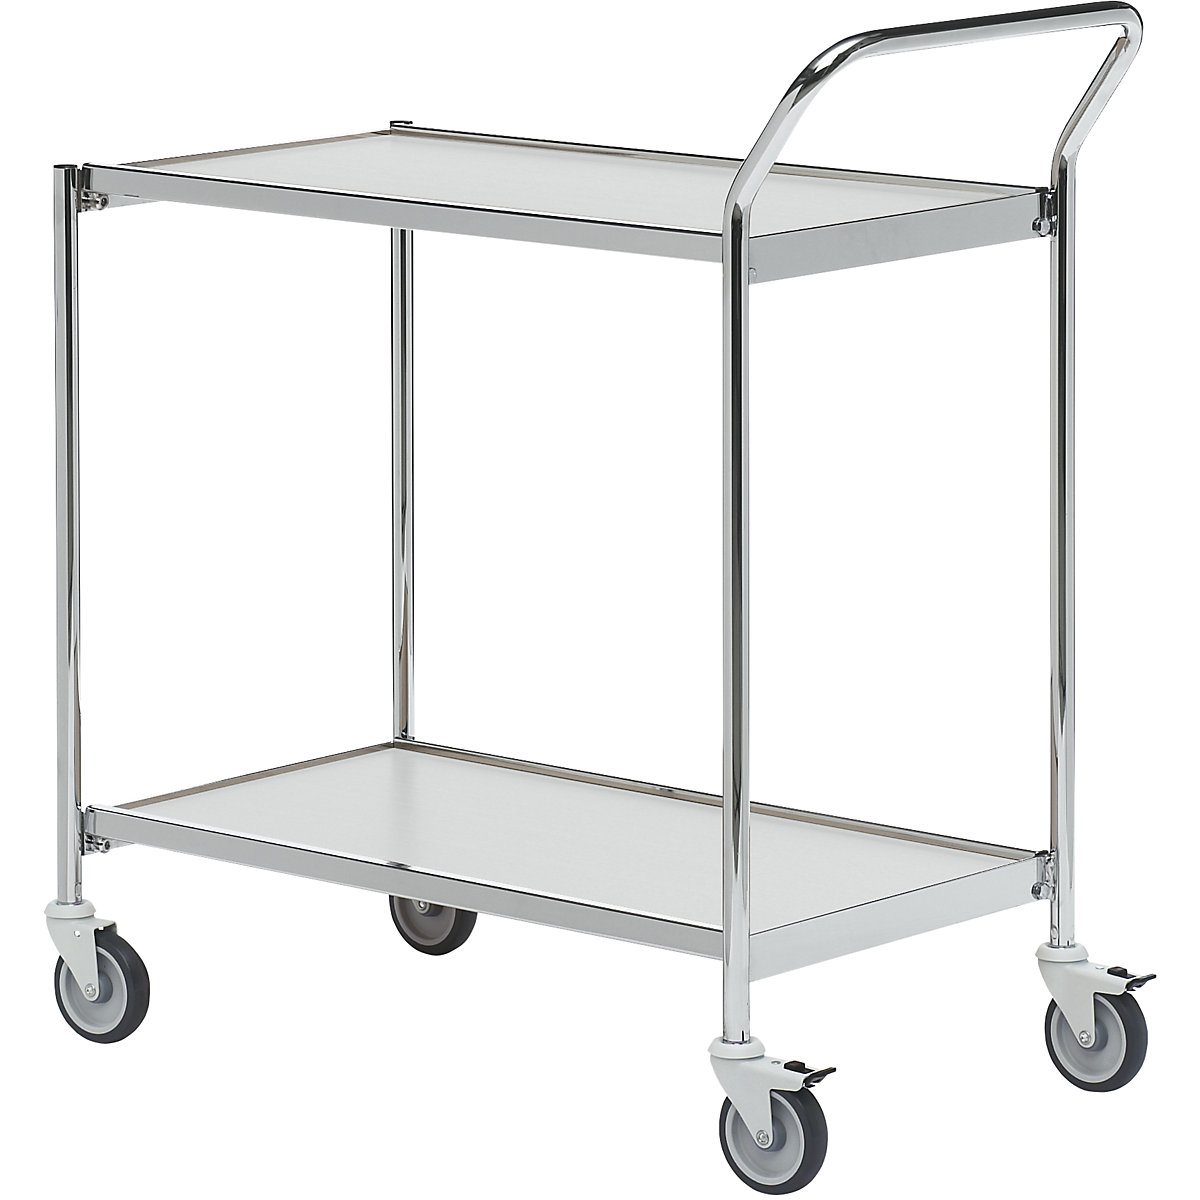 Stolový vozík – HelgeNyberg, 2 etáže, d x š 800 x 420 mm, chrom / šedá, od 5 ks-23